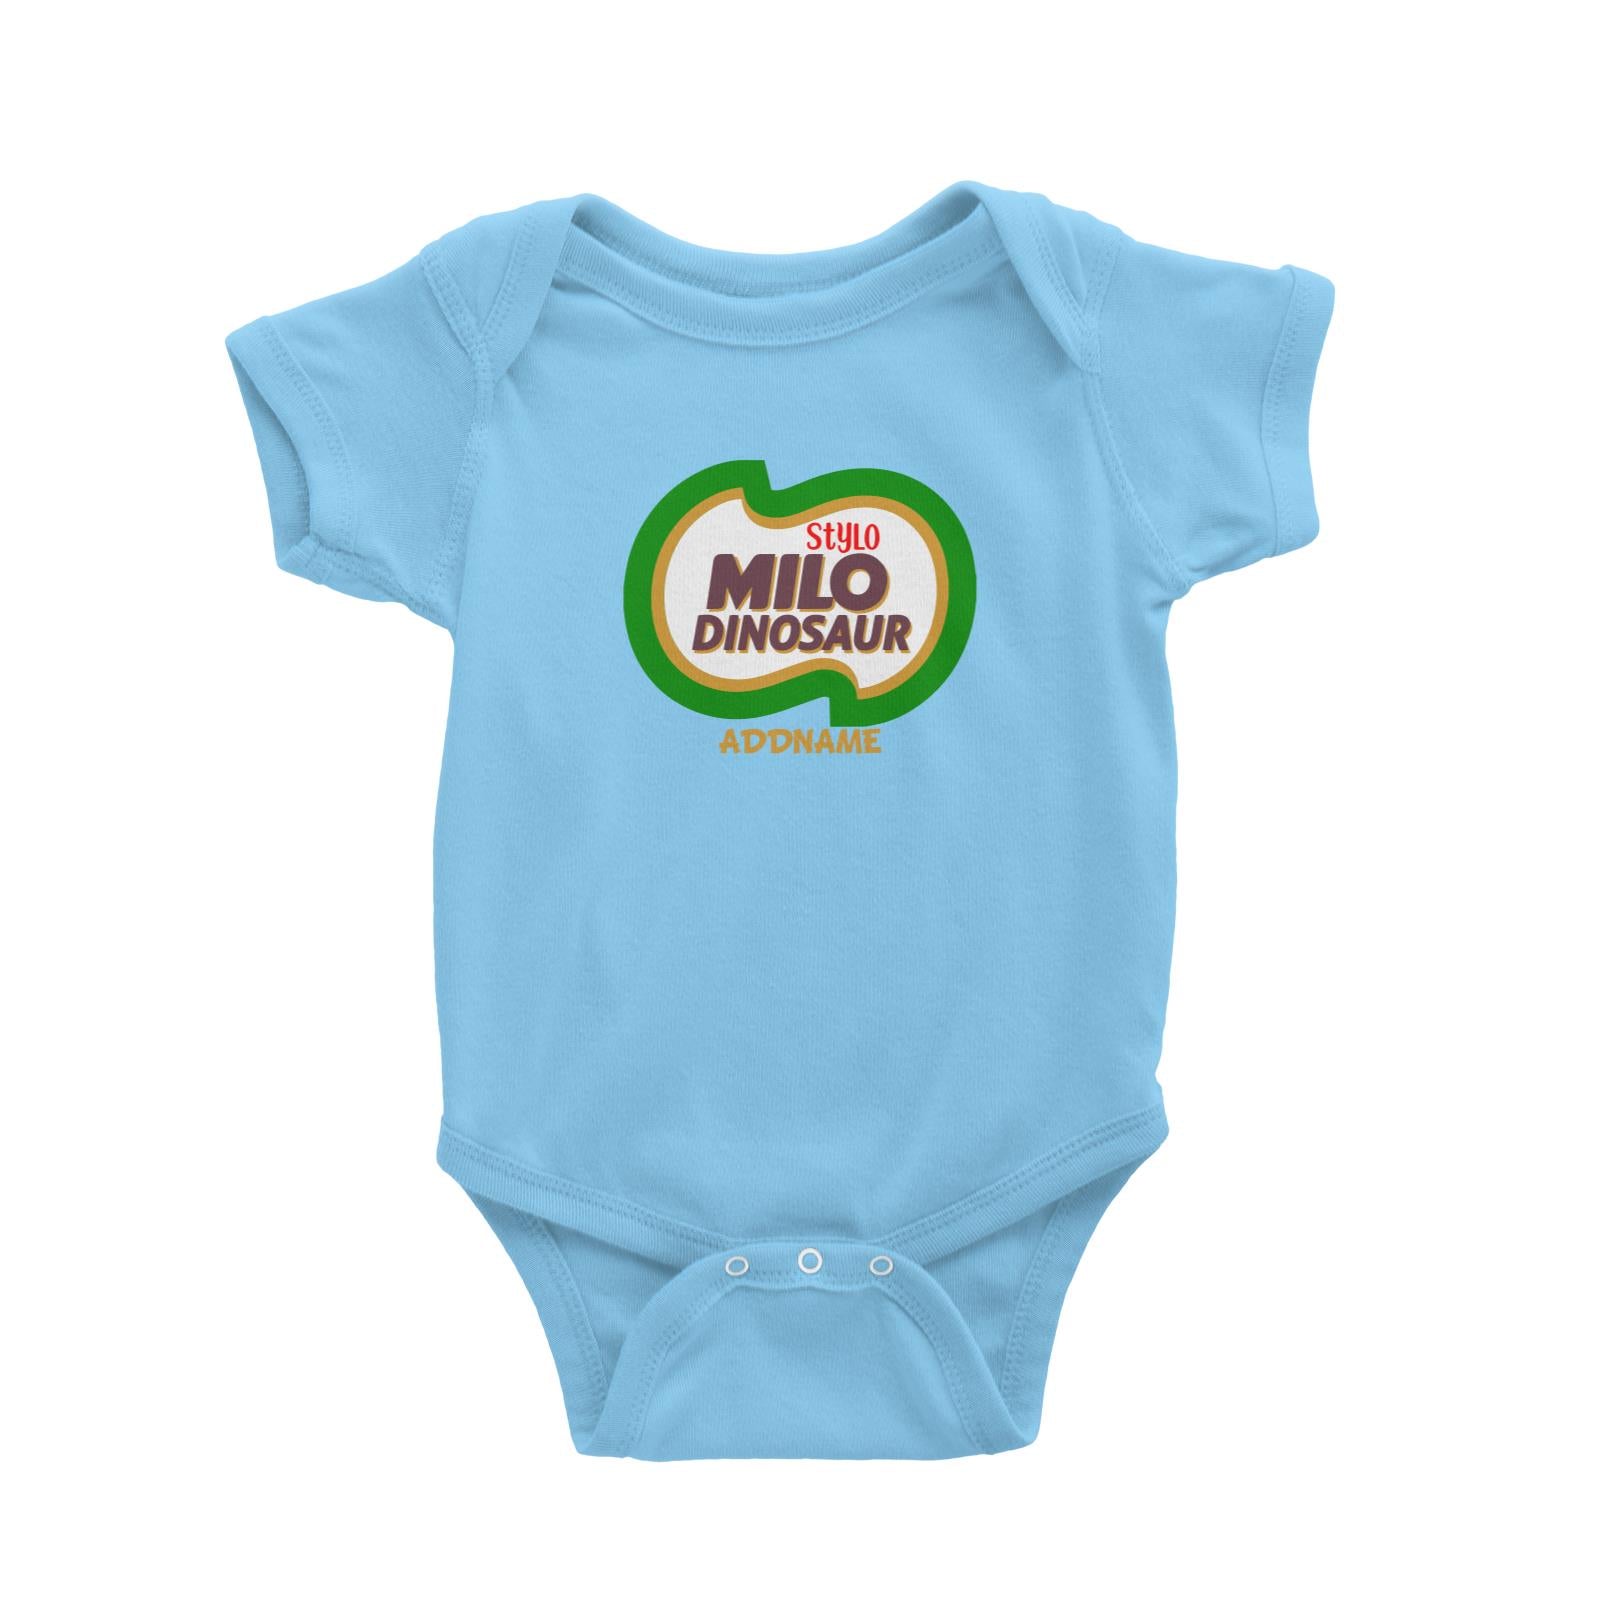 Stylo Milo Dinosaur Baby Romper